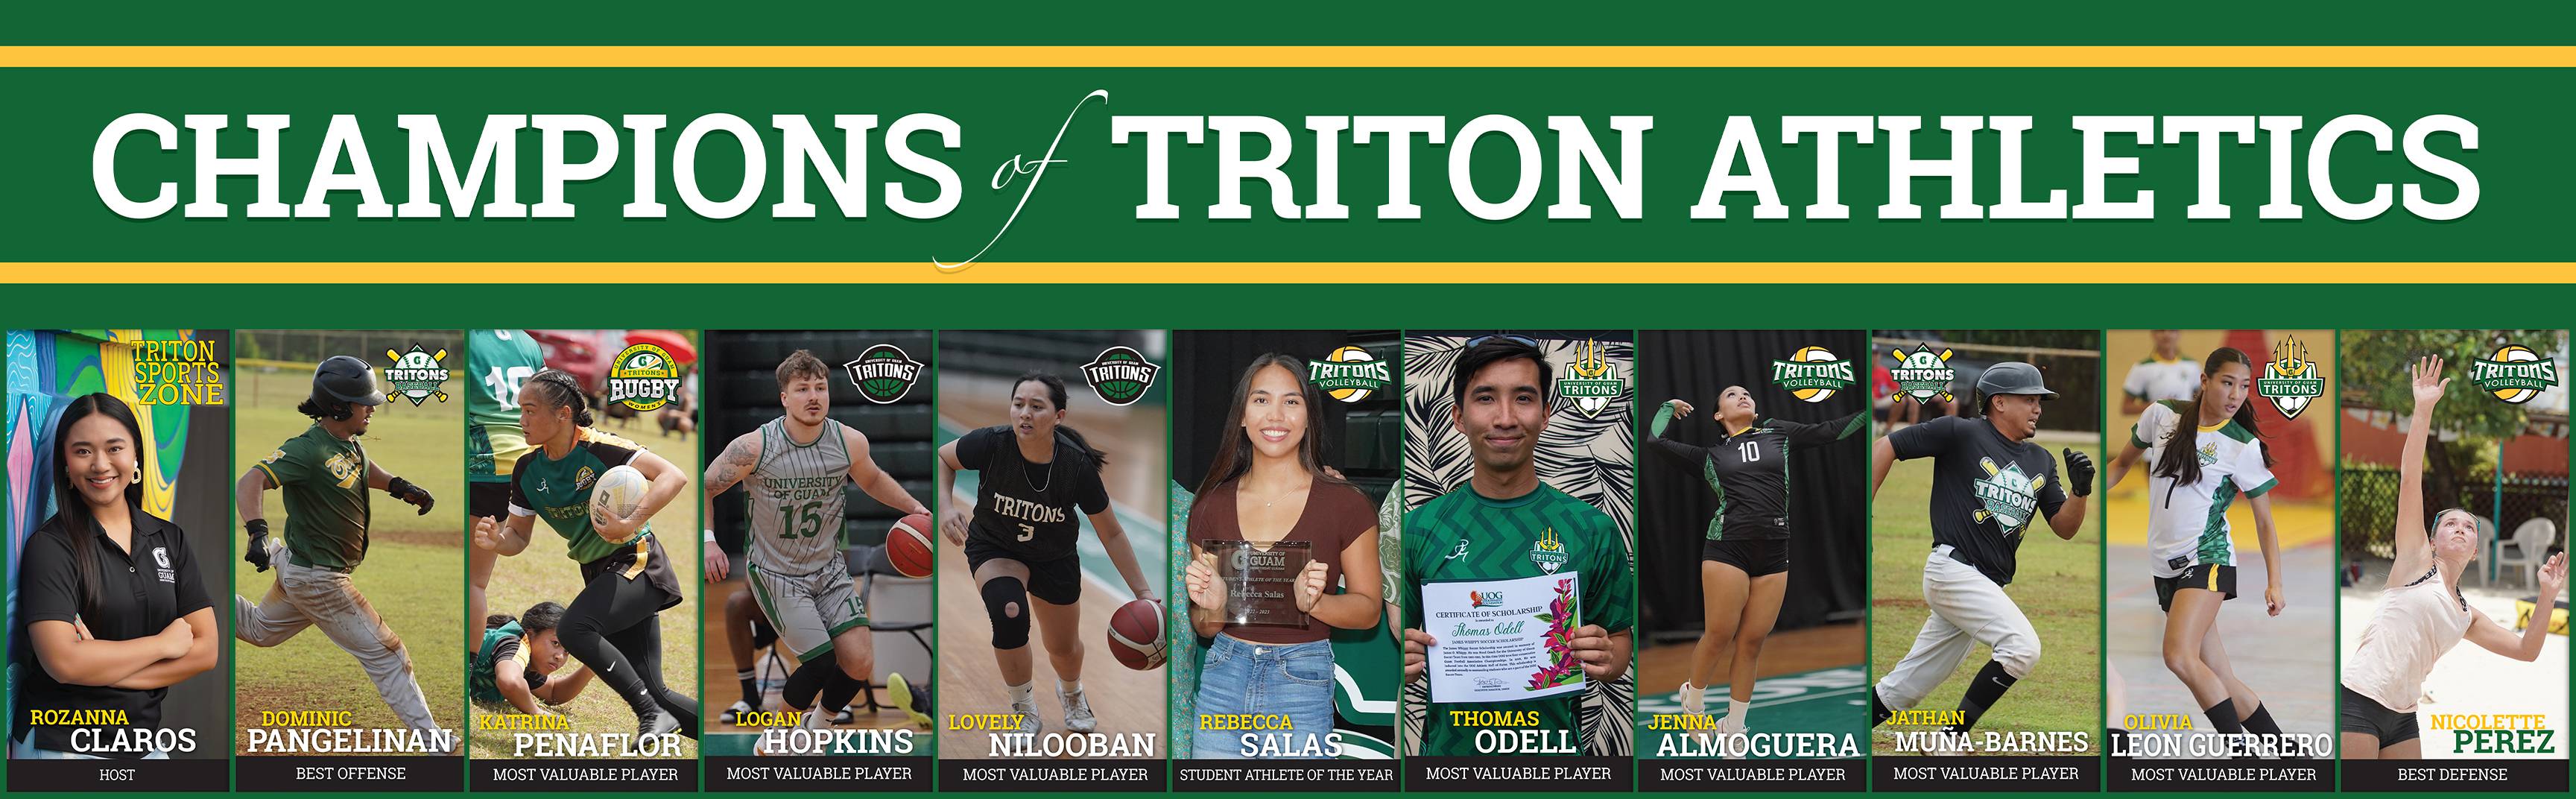 Champions of Triton Athletics